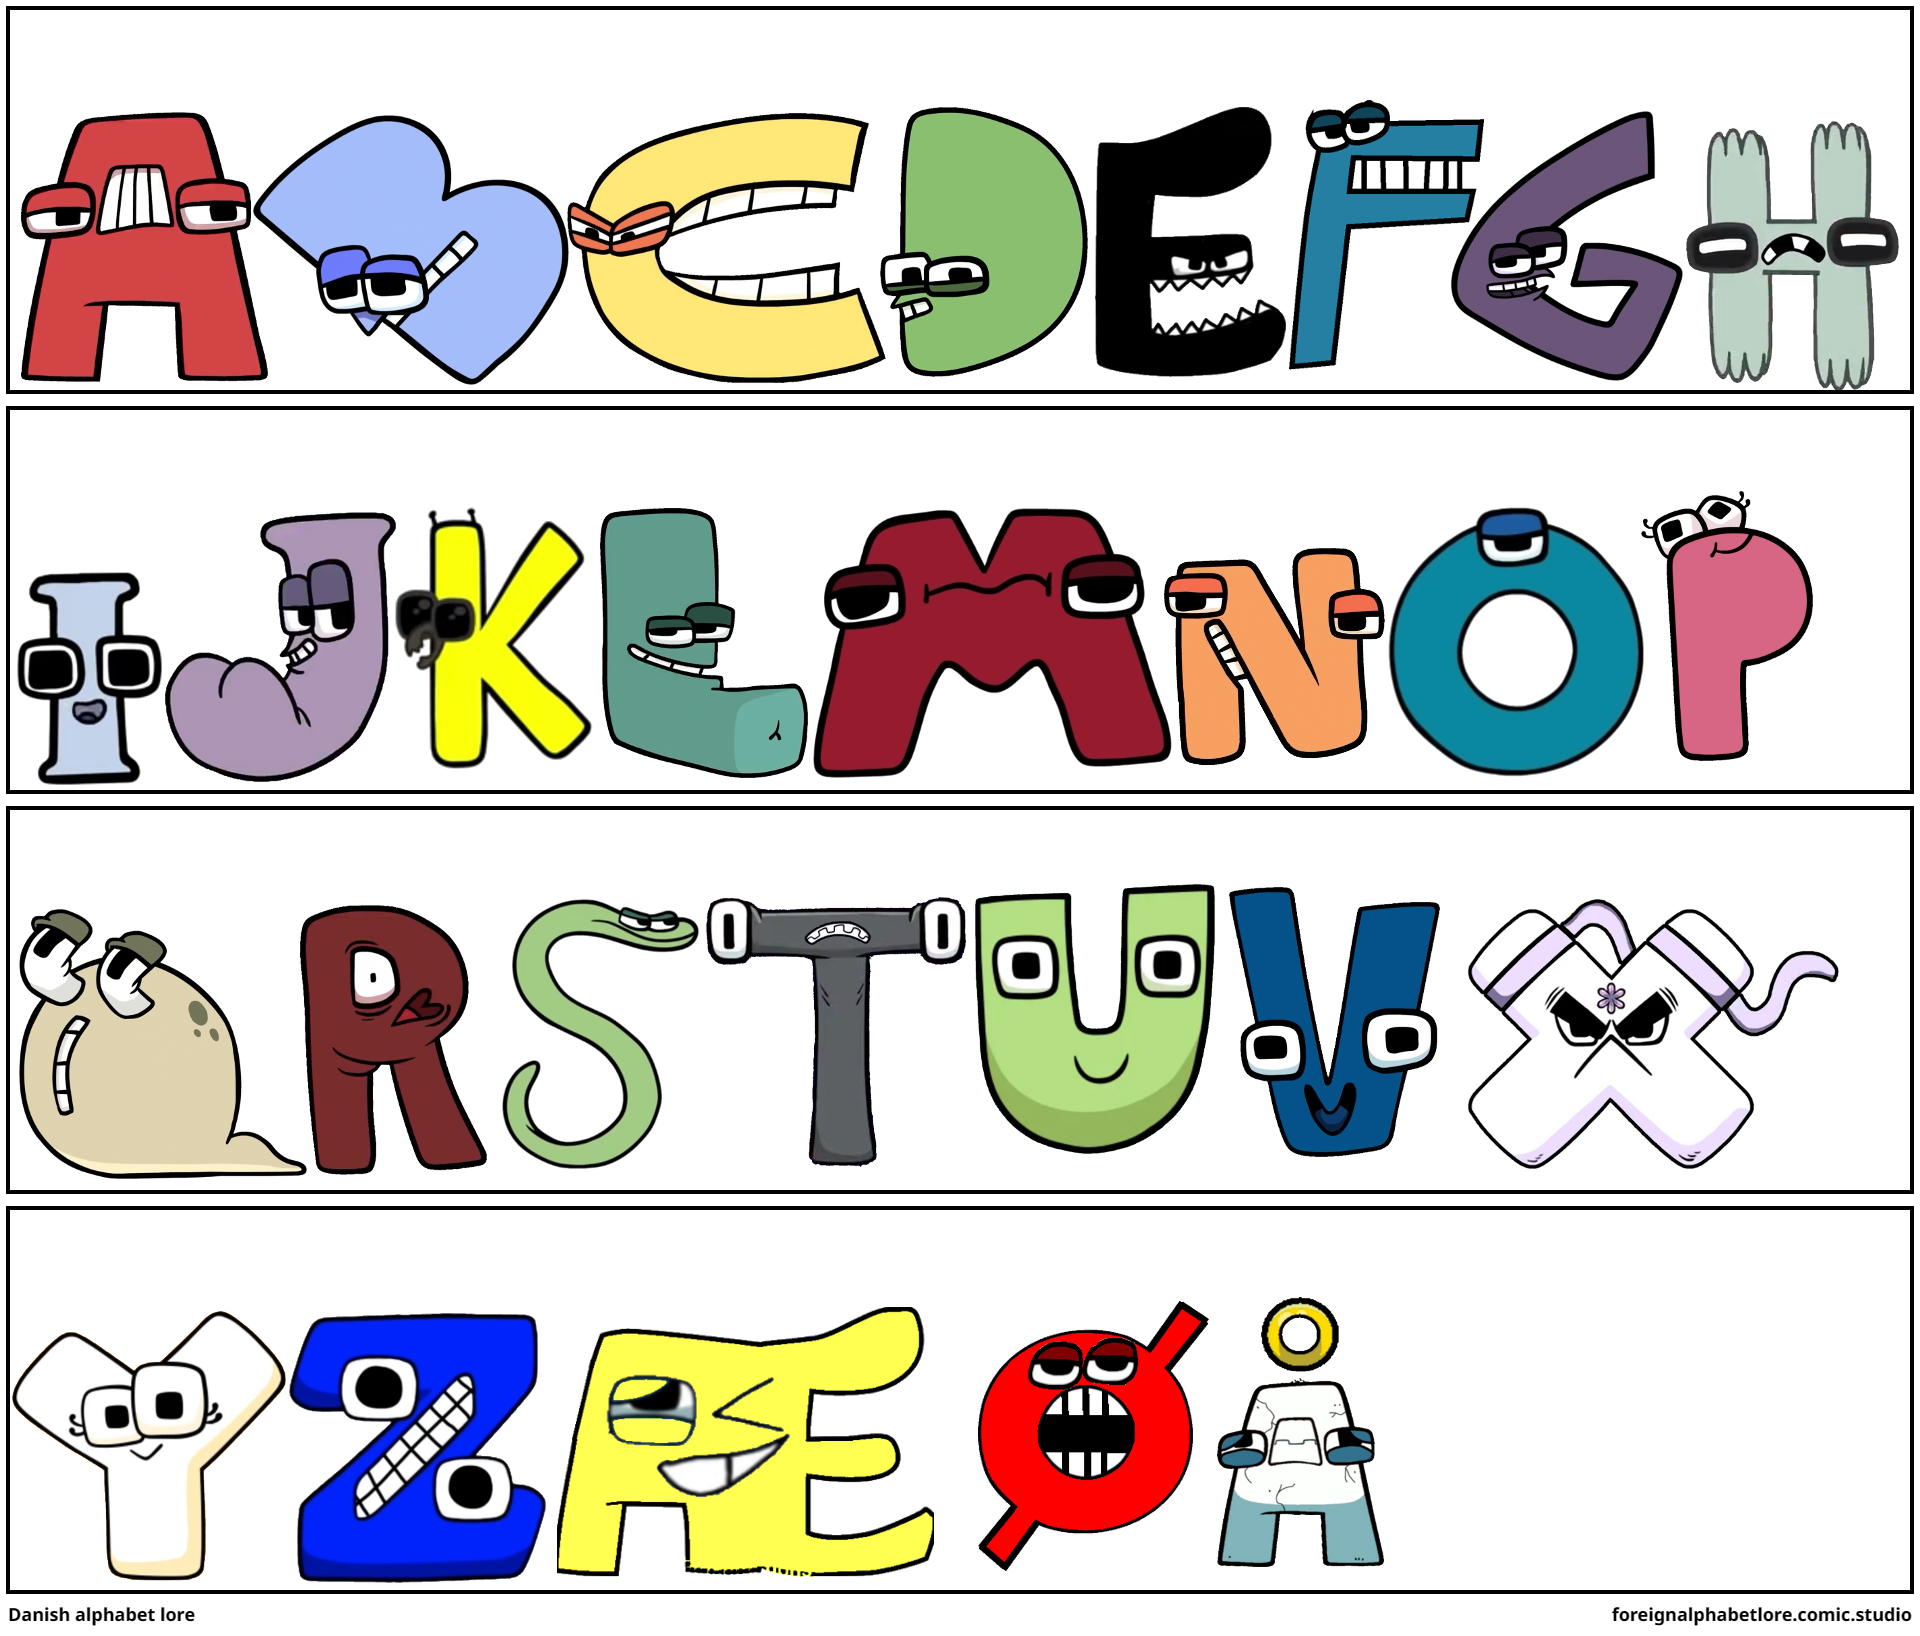 Danish alphabet lore - Comic Studio